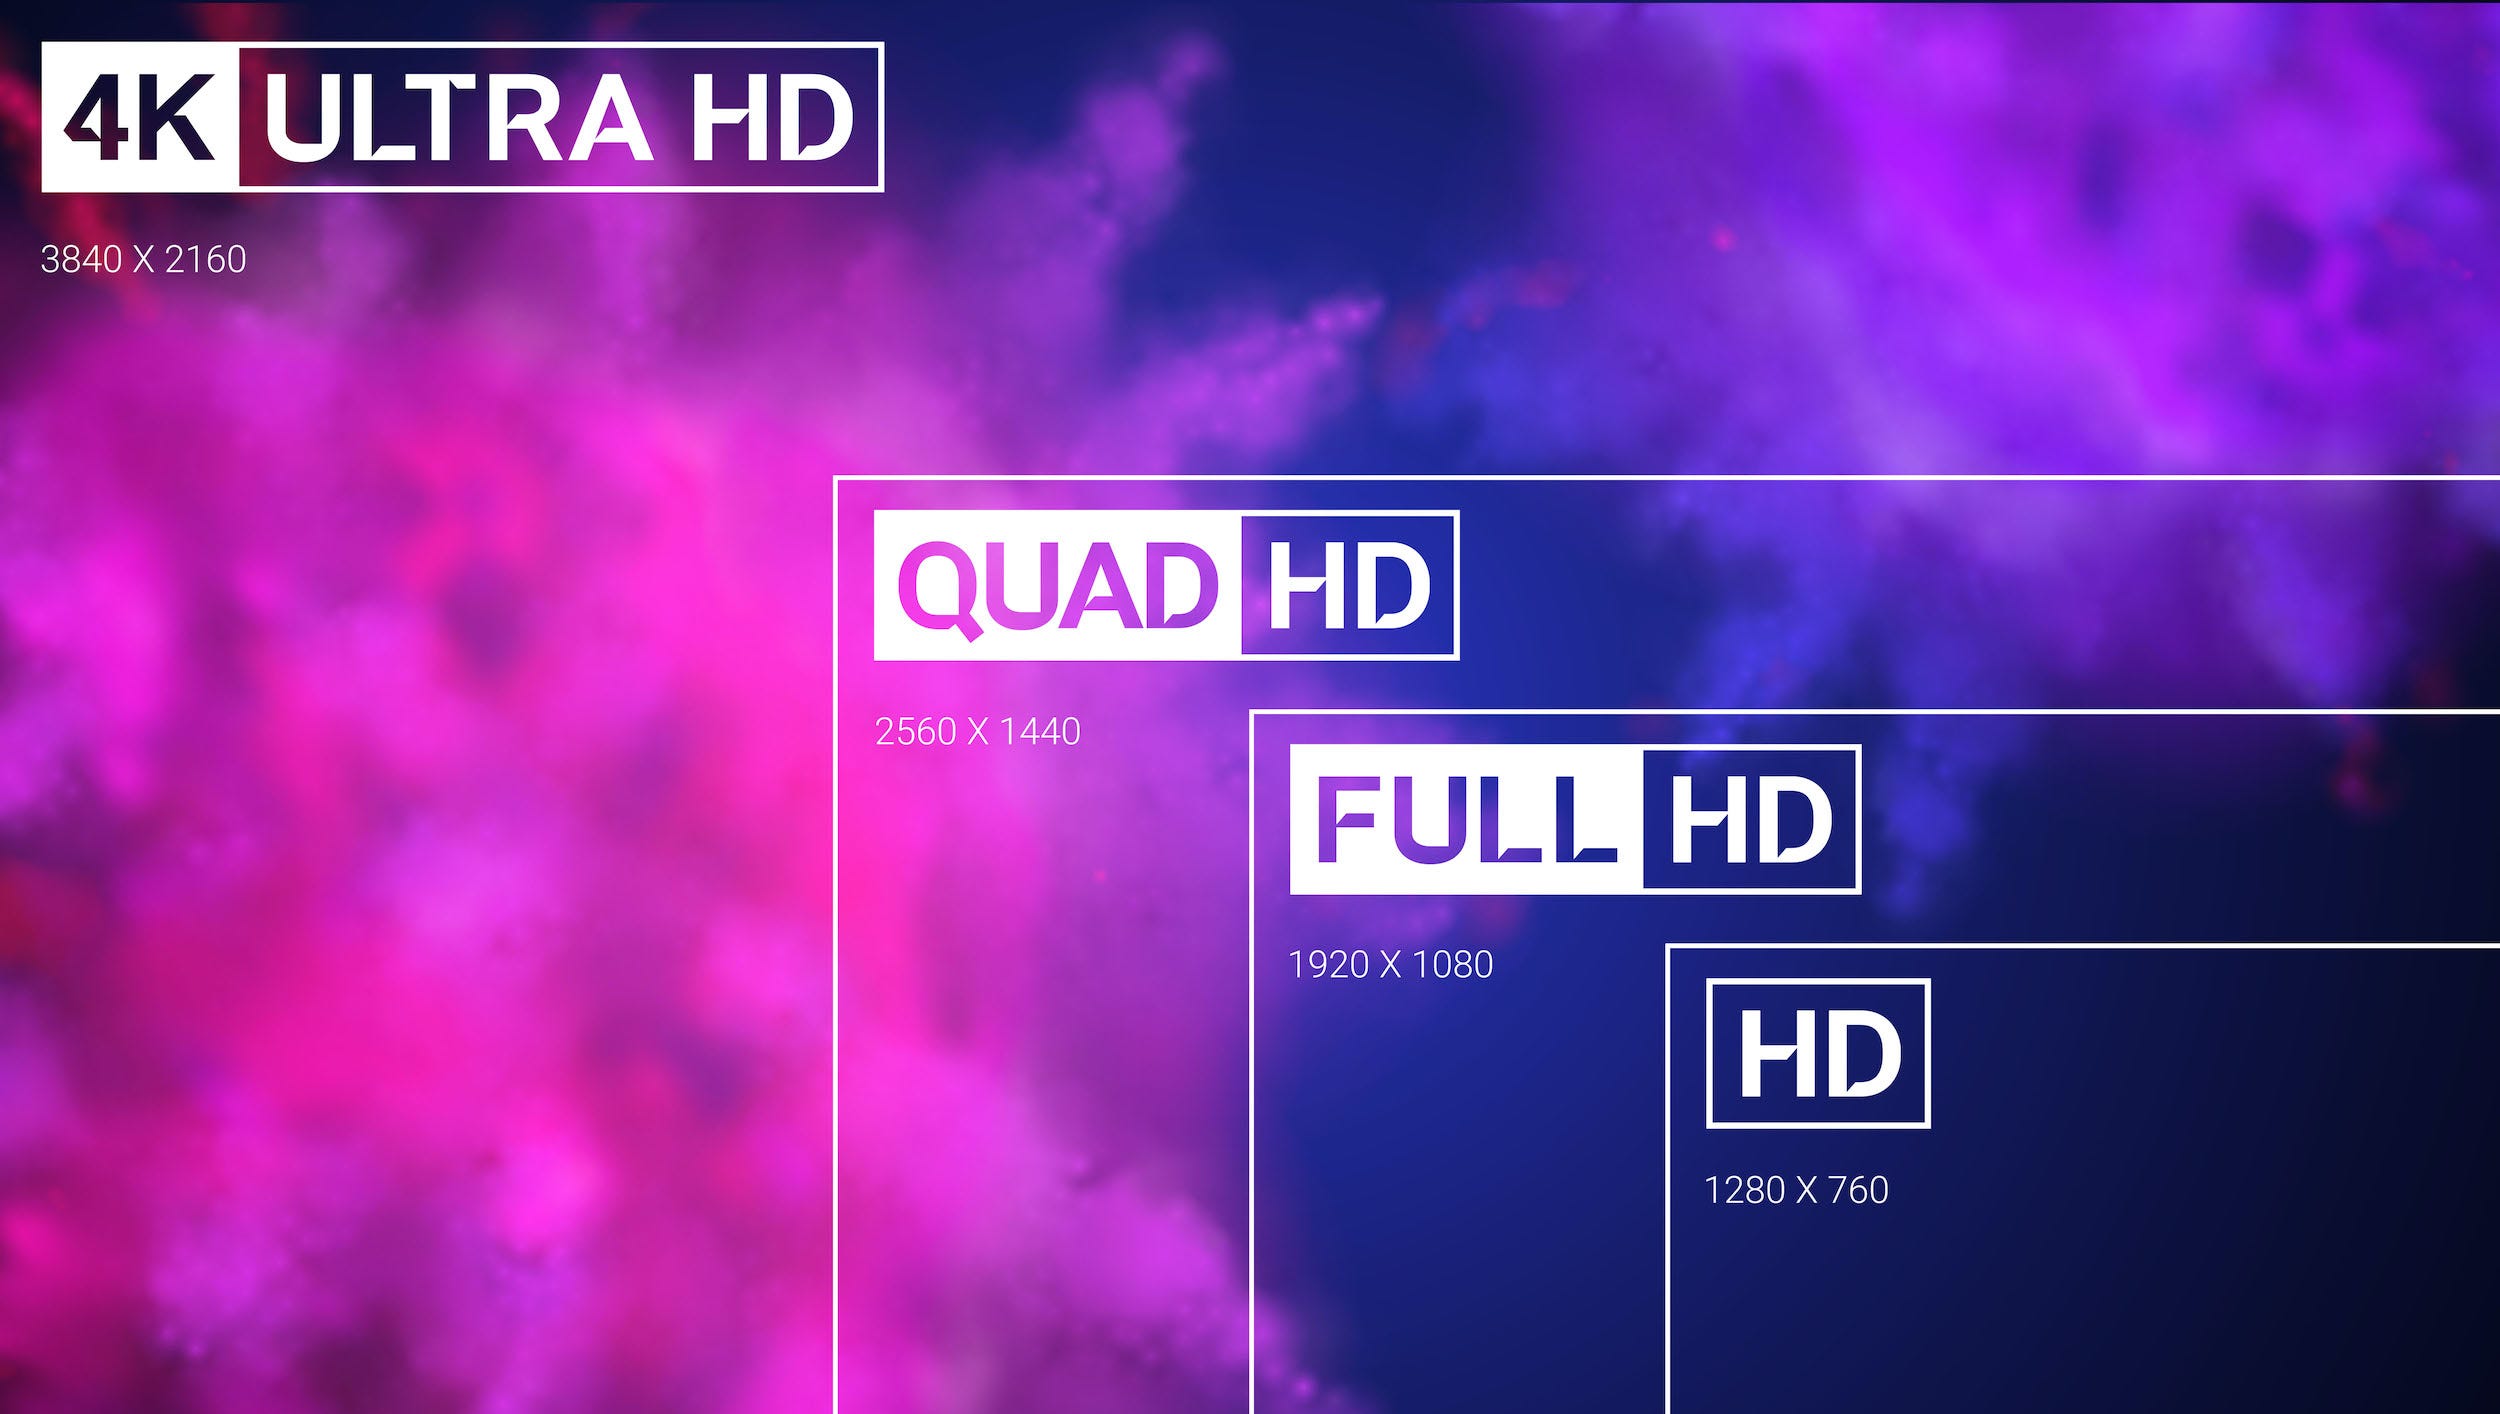 Comparison between 4K UHD, QHD, FHD, and HD